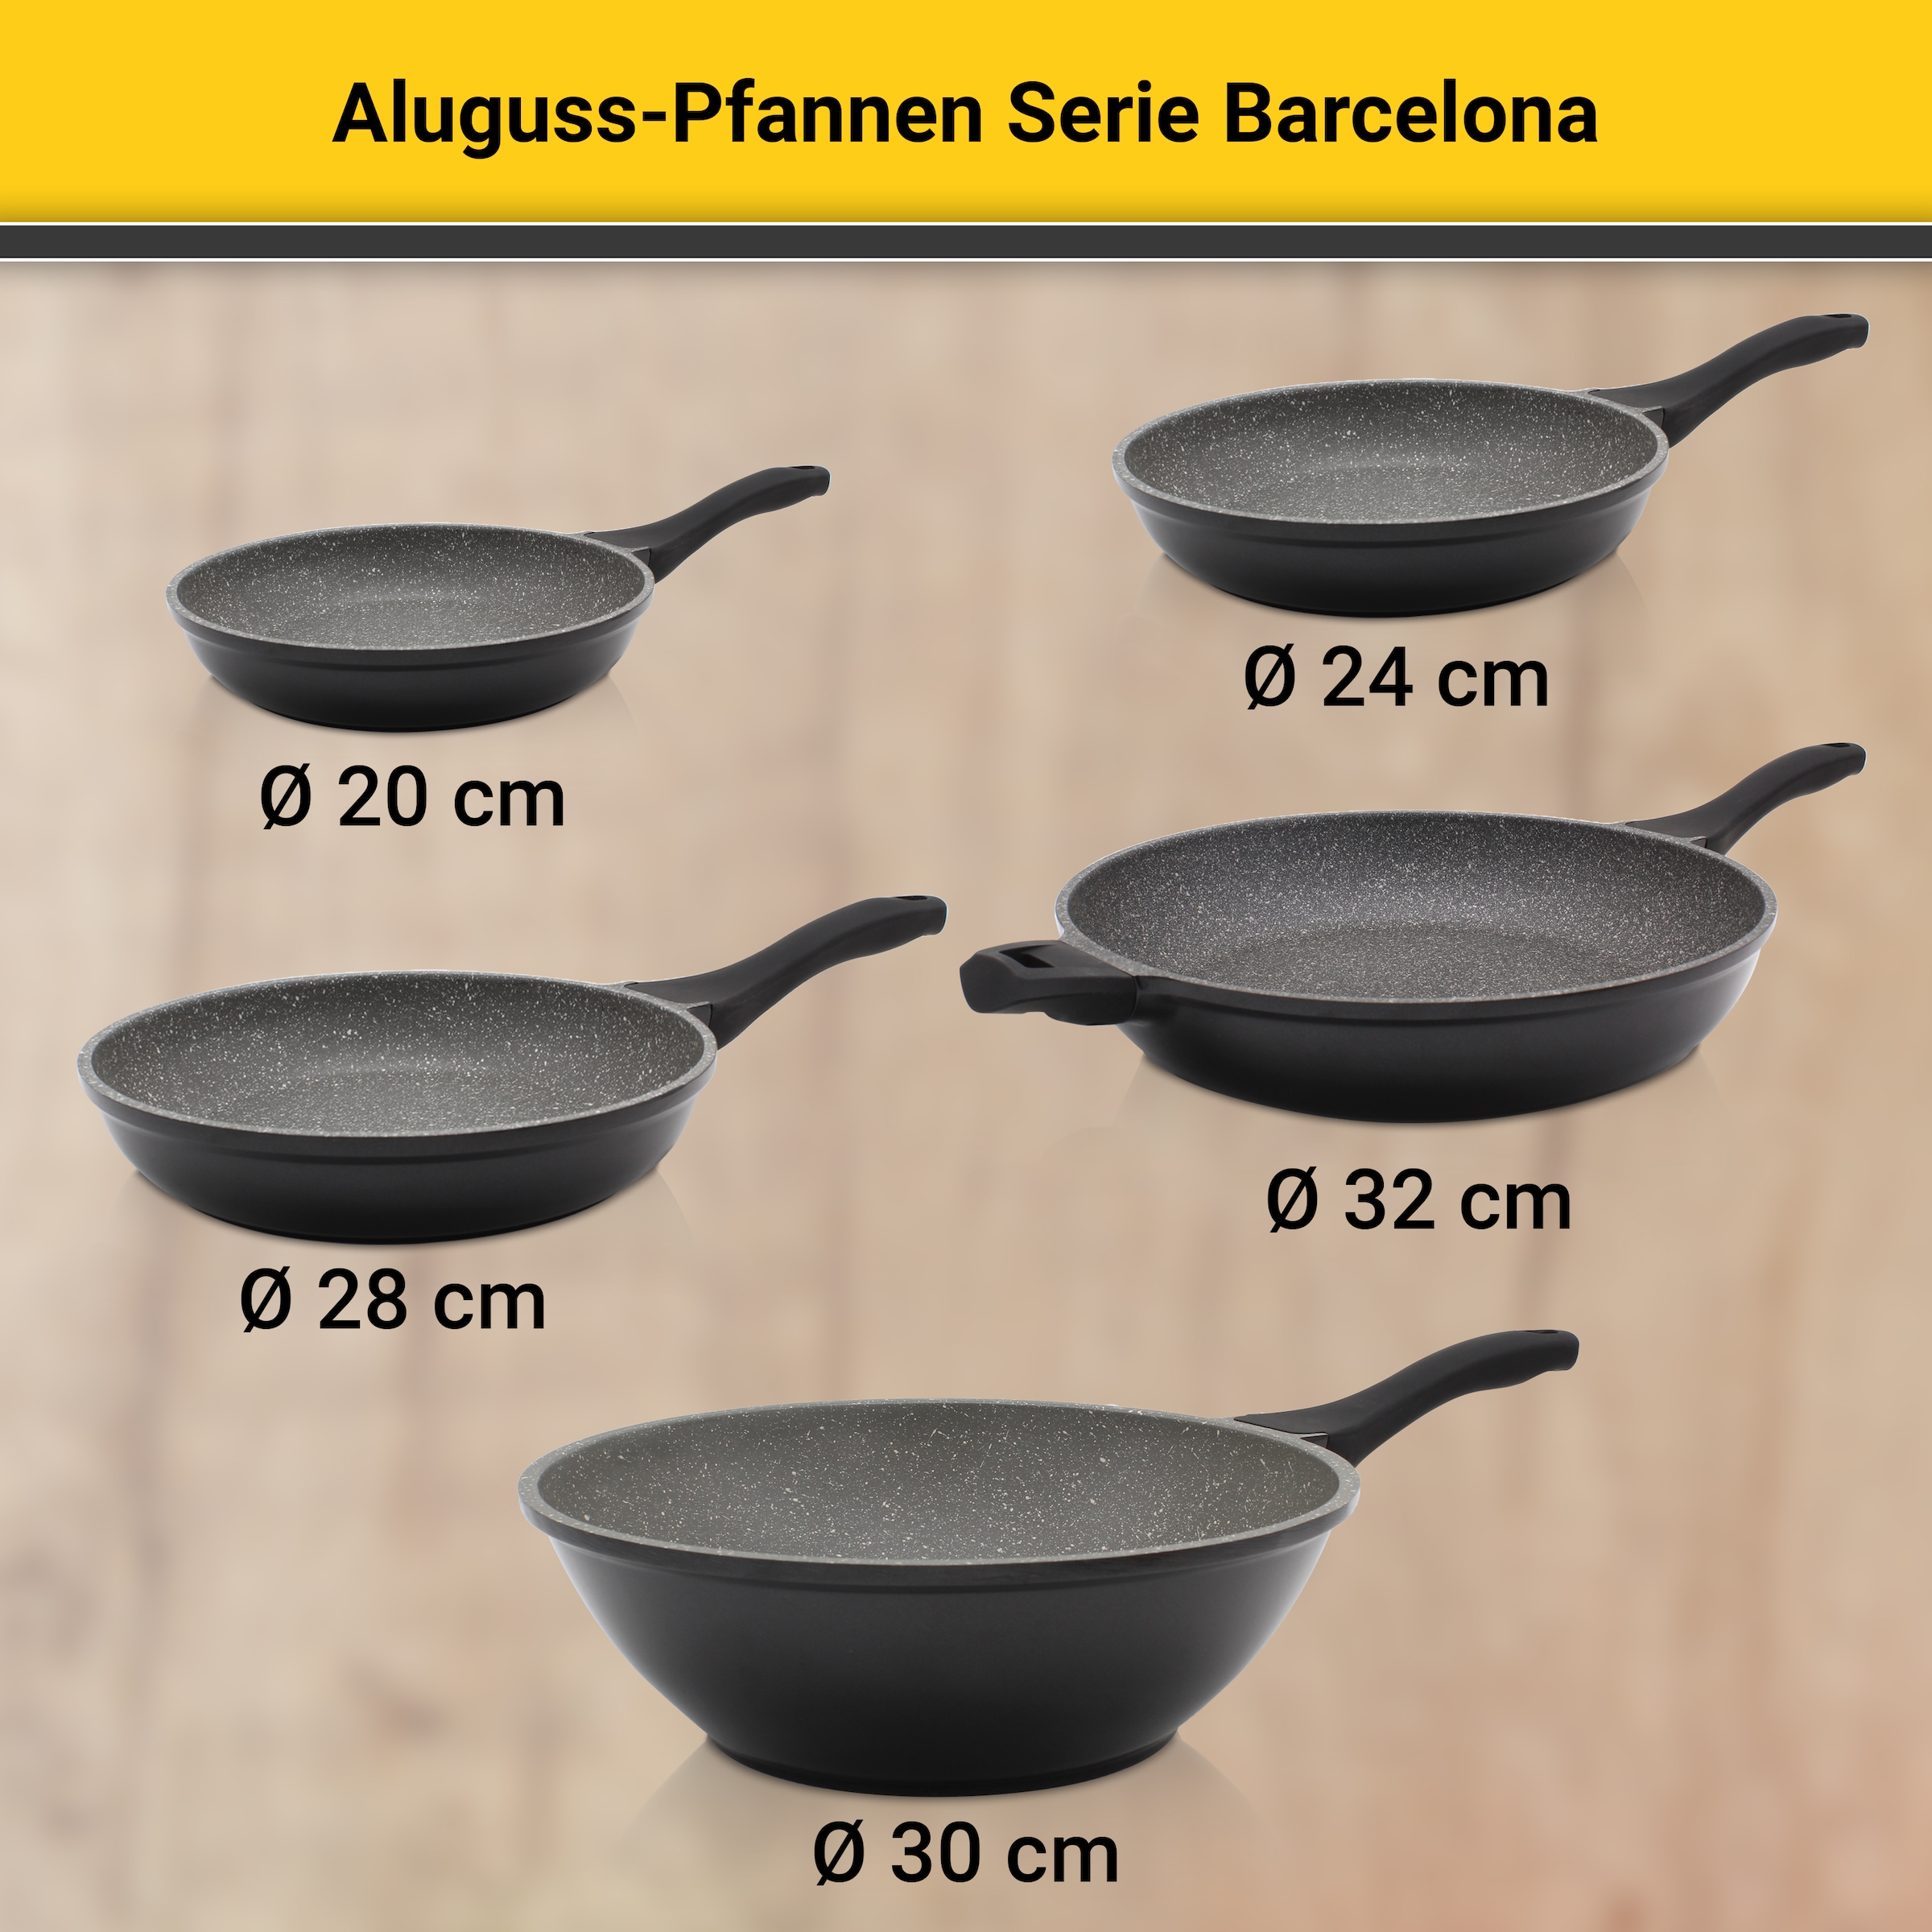 Krüger Wok »Aluguss Wokpfanne Barcelona, 30 cm«, Aluminiumguss, (1 tlg.), für Induktions-Kochfelder geeignet